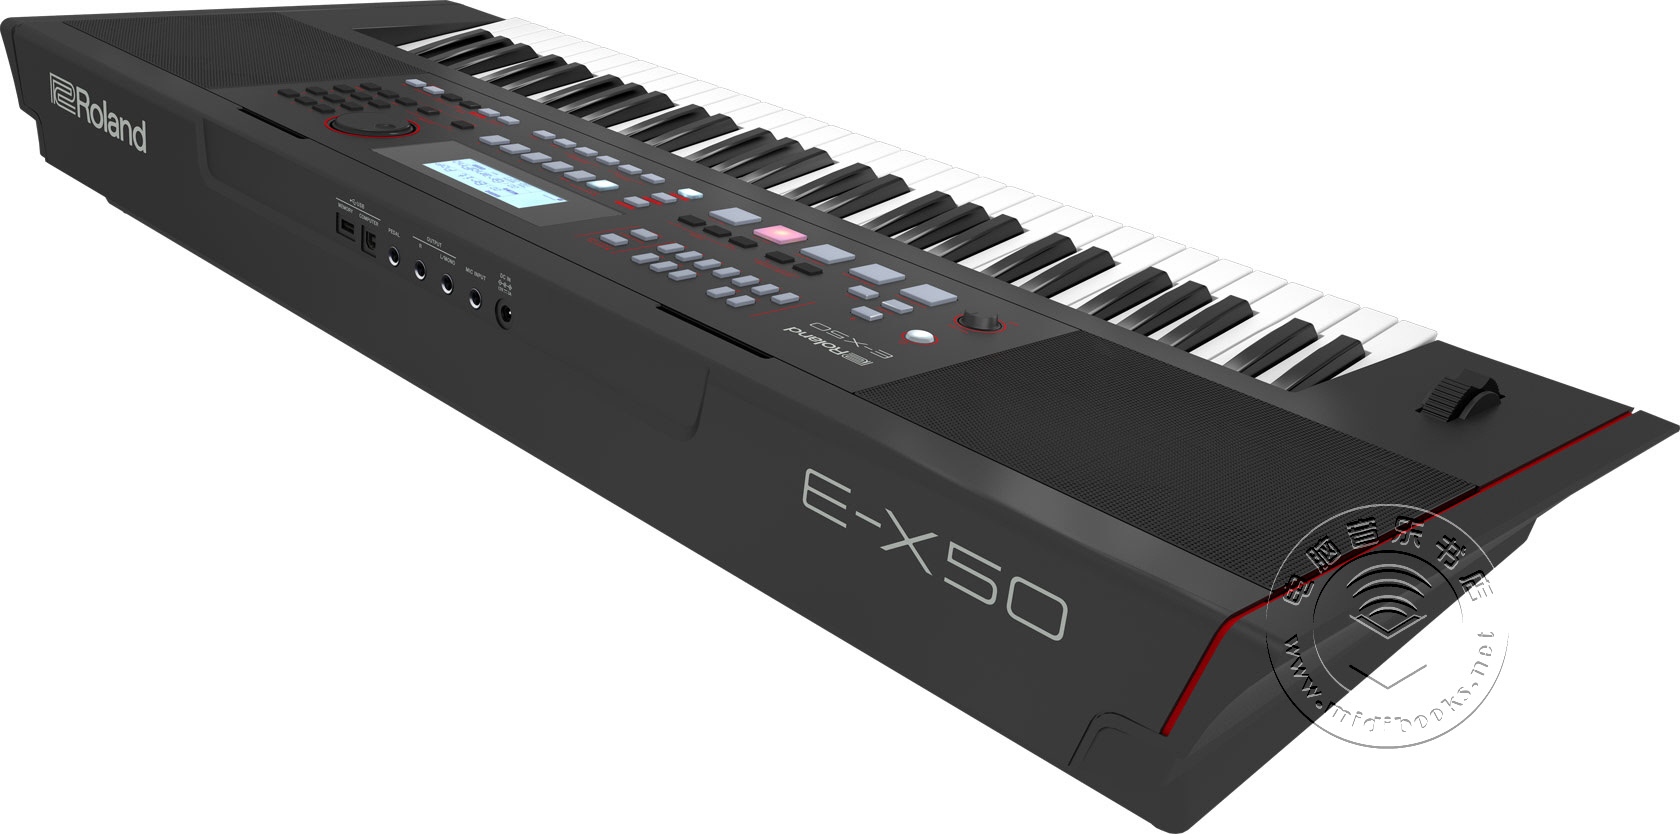 Roland（罗兰）发布入门级一体化编曲键盘E-X50（视频）